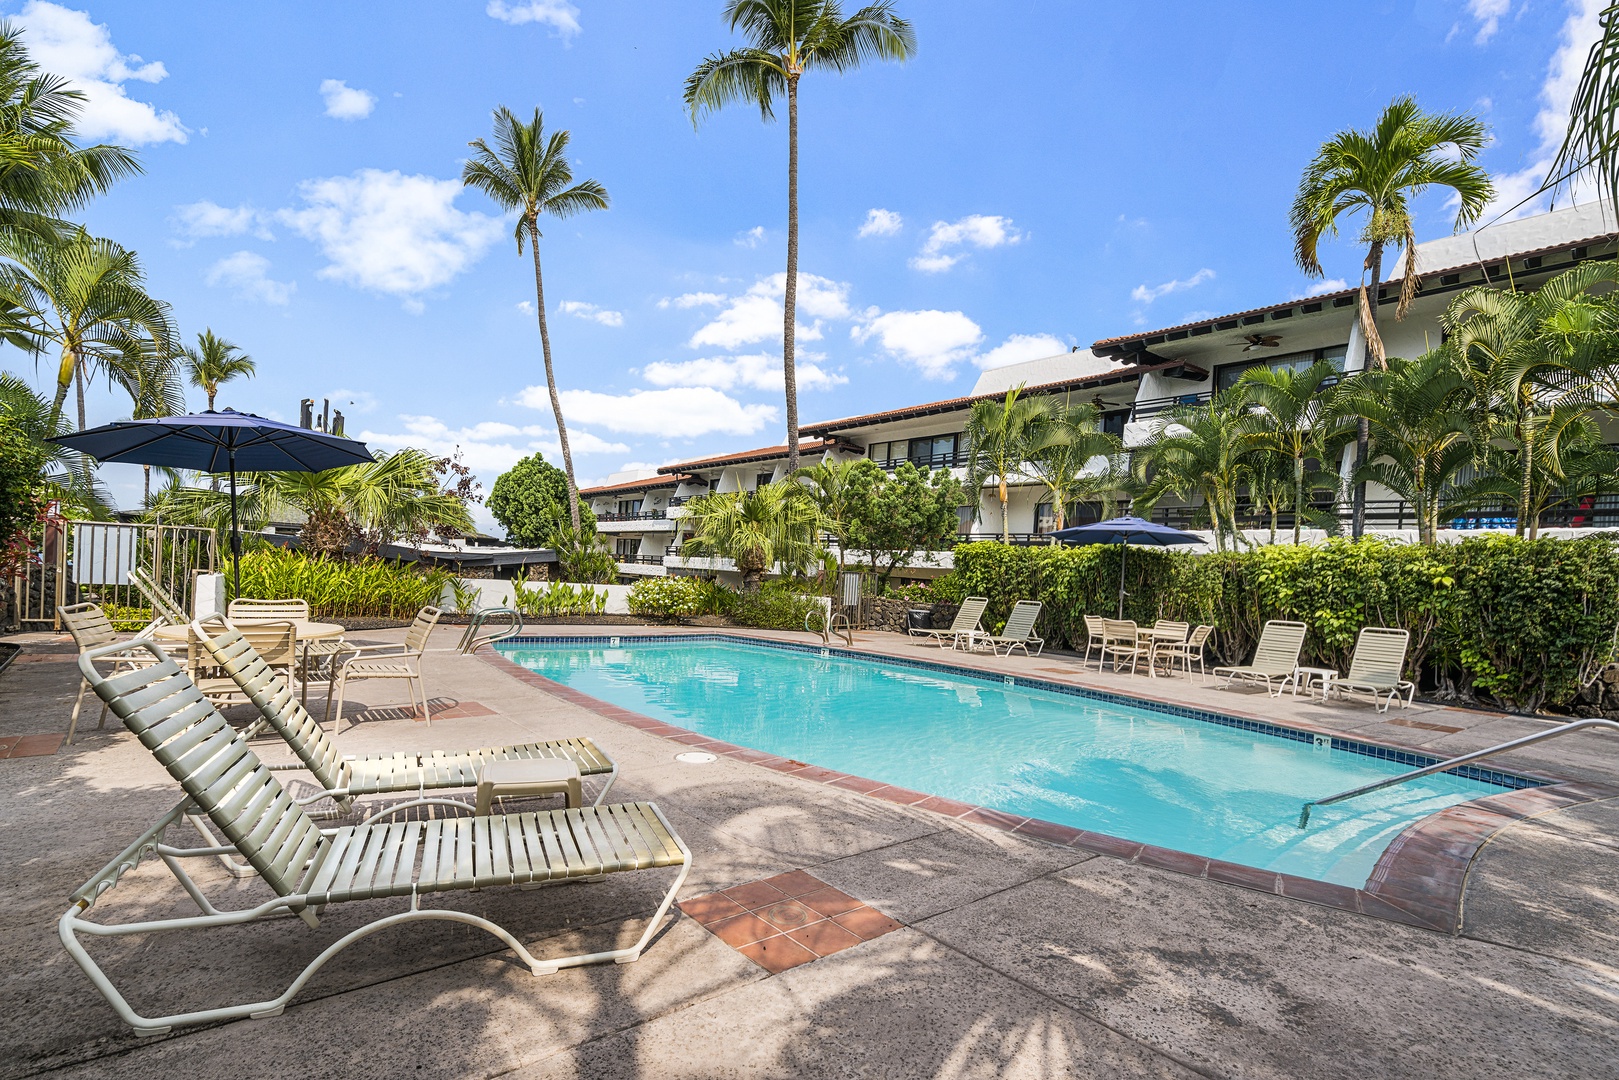 Kailua Kona Vacation Rentals, Casa De Emdeko 104 - Lounge pool side!